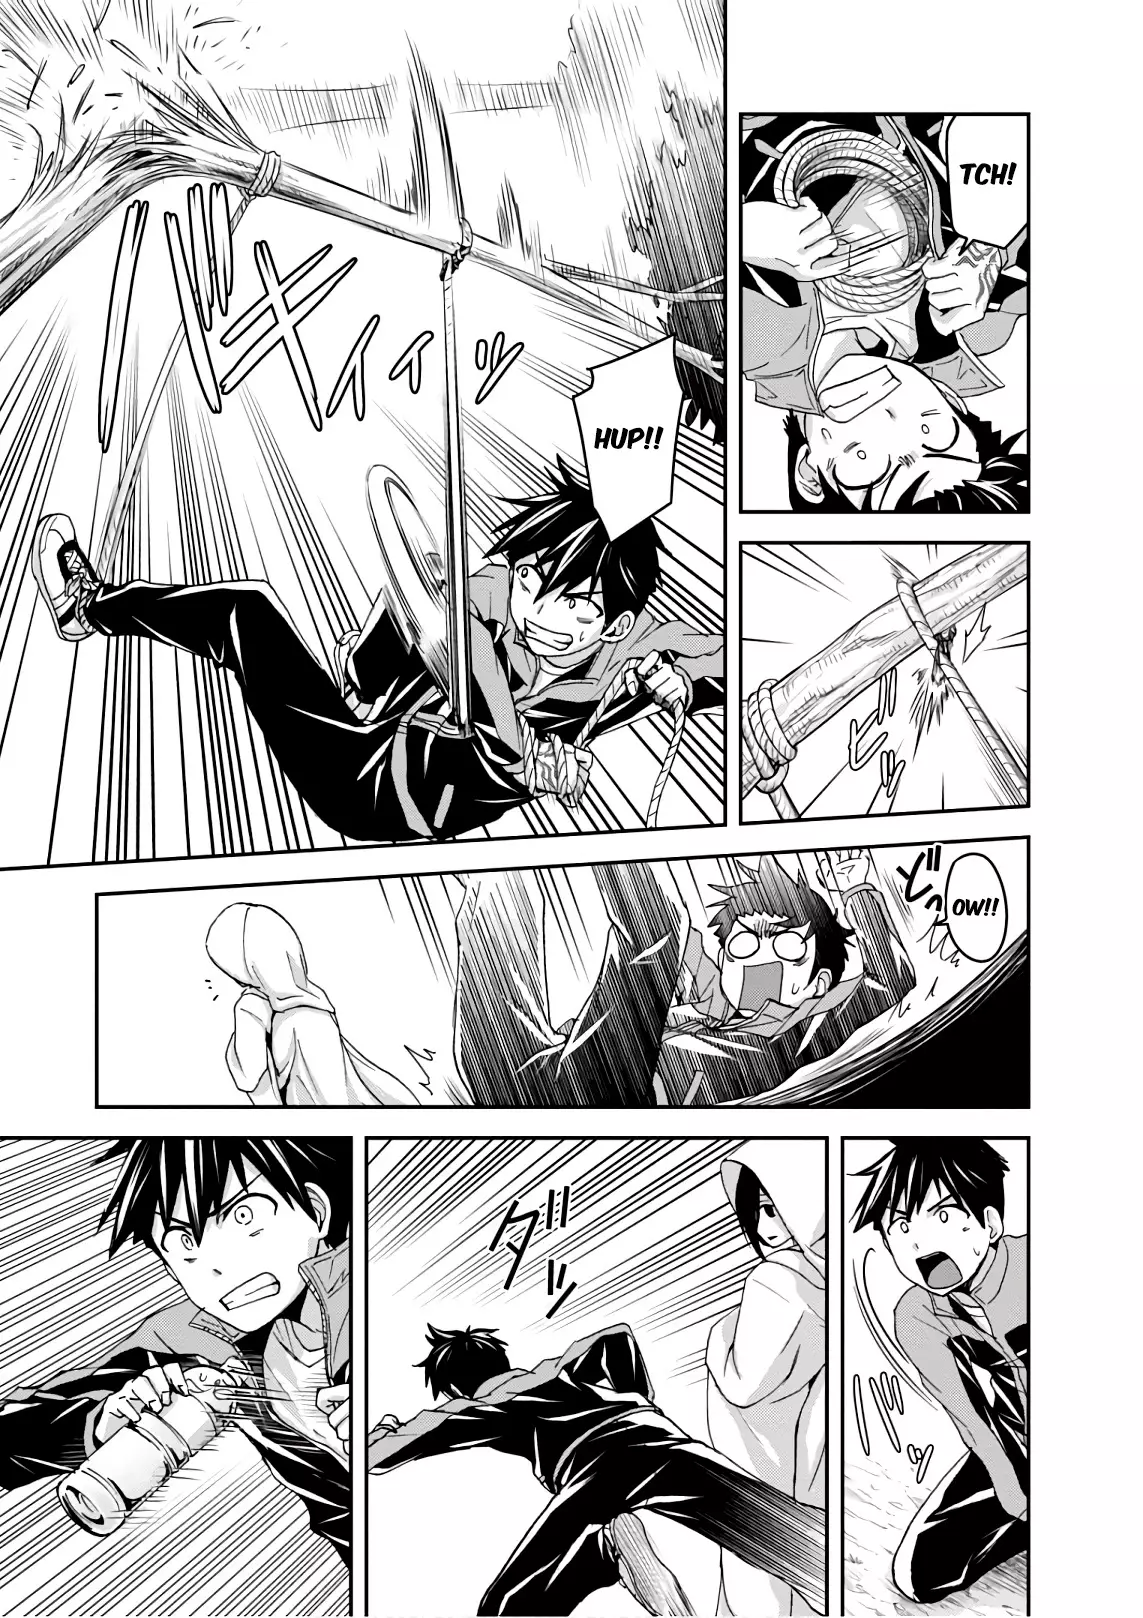 Shinobi Kill - 15 page 15-12cd77d7